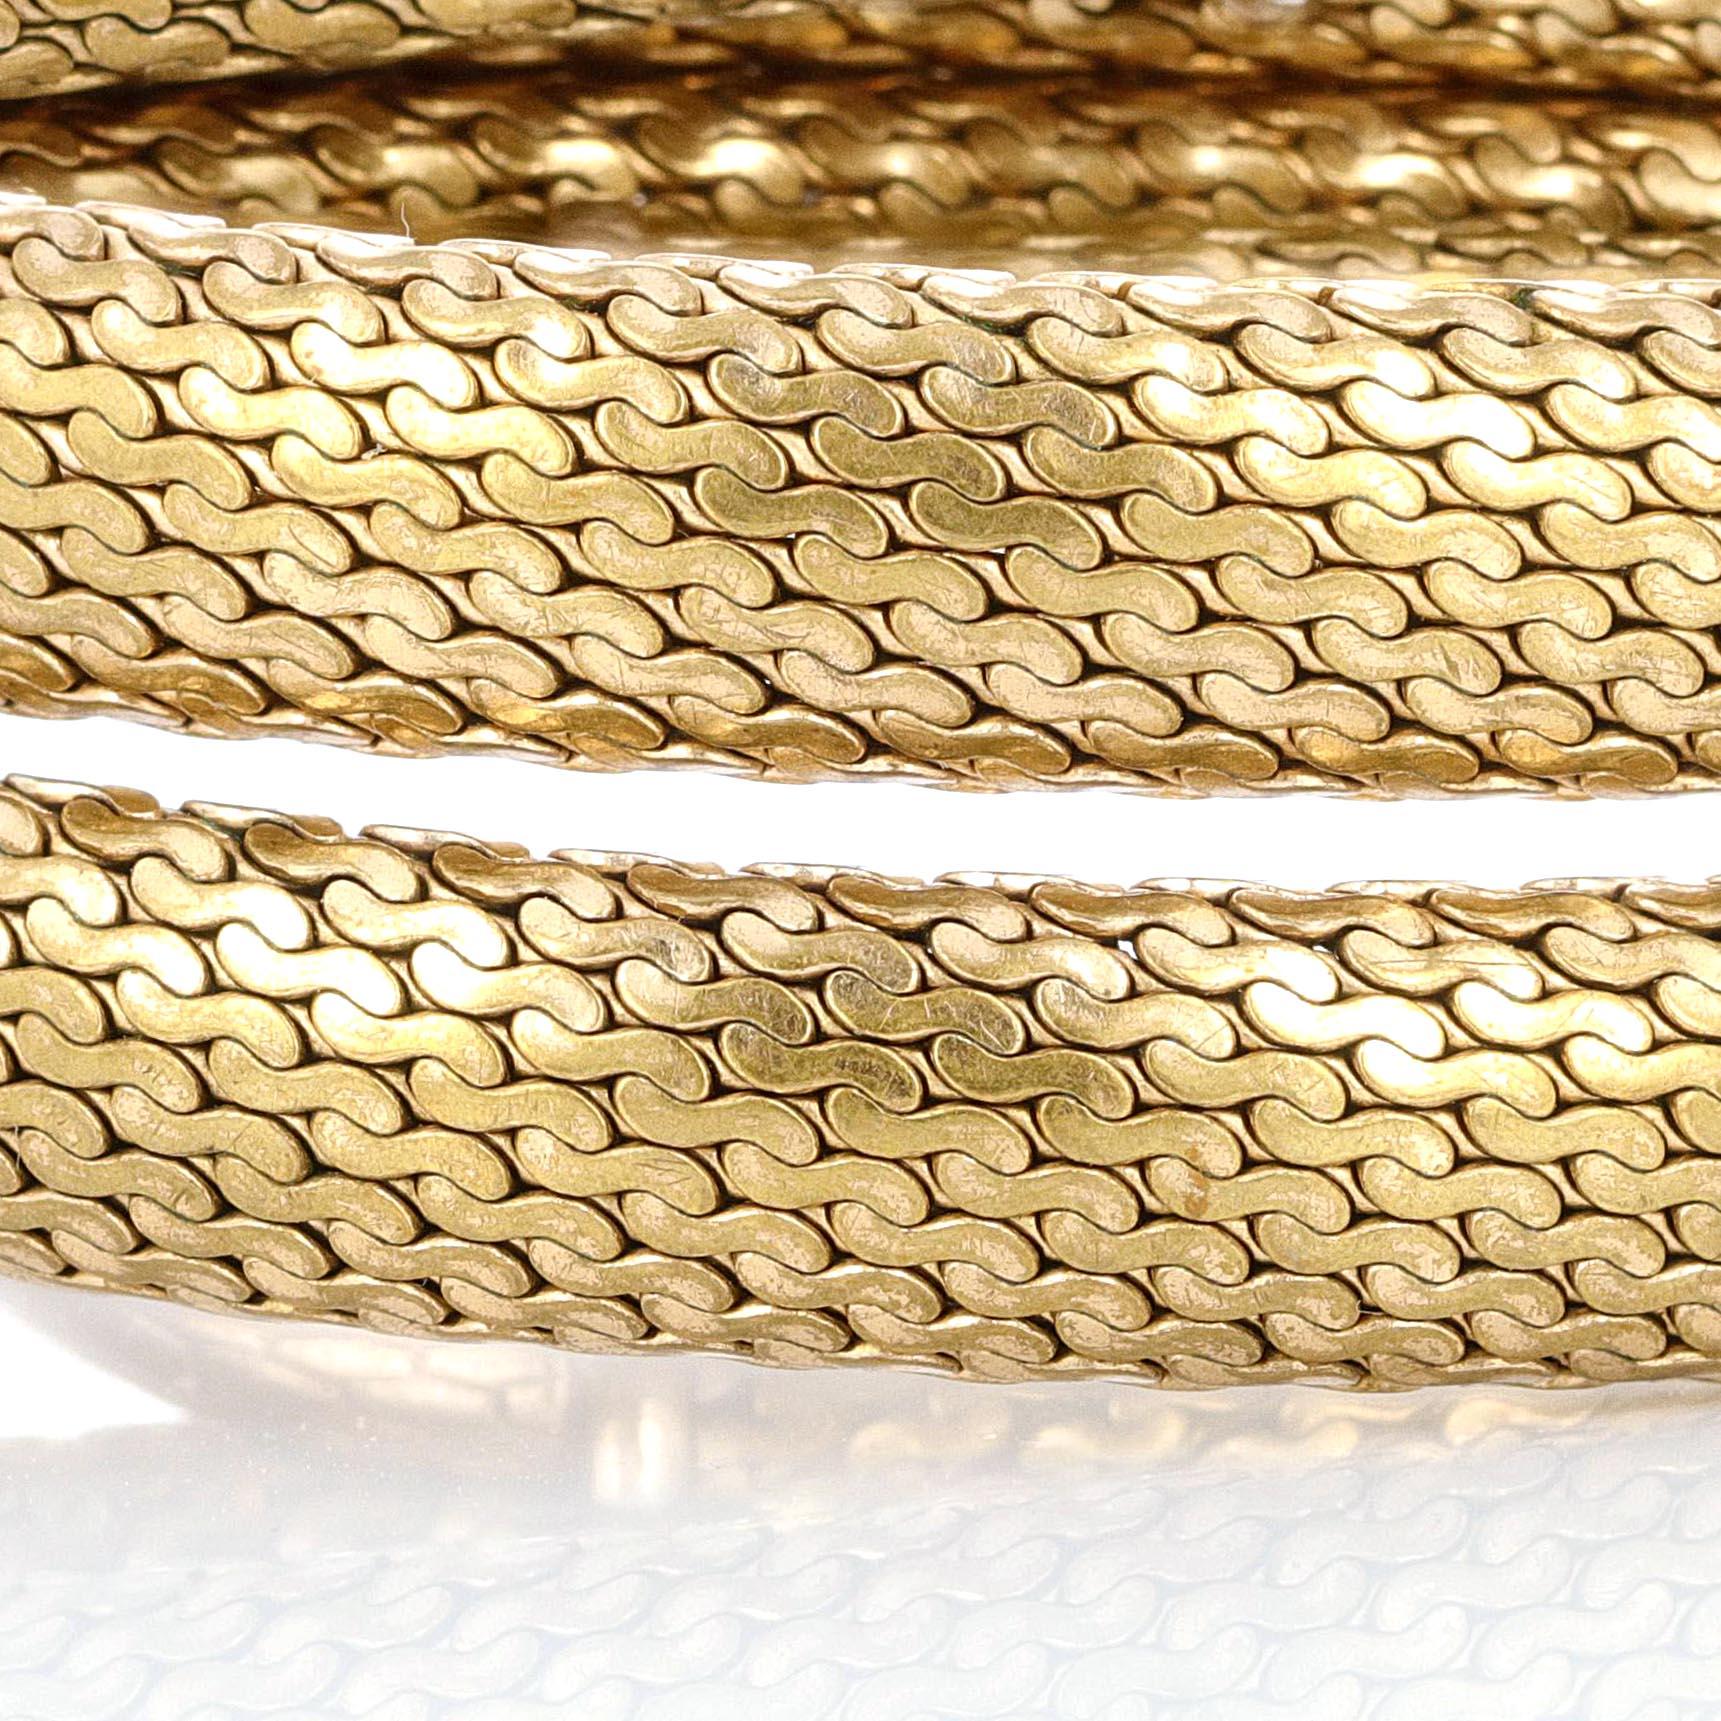 snake bracelet gold